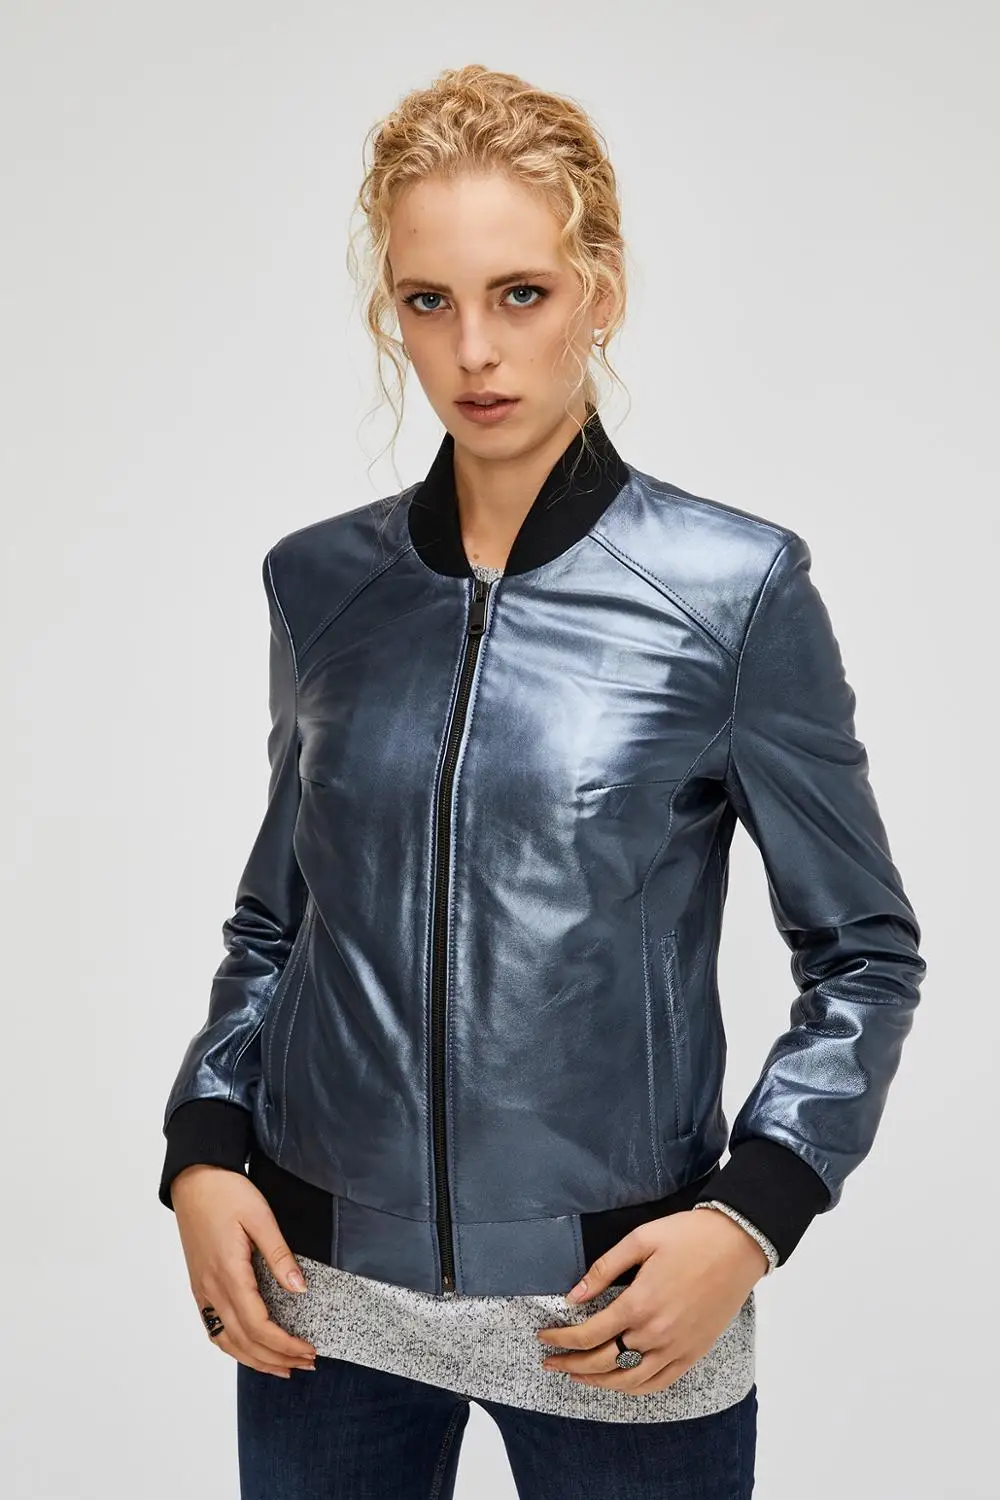 Spring Cool Fashion Silver Genuine Leather Jacket Female Bomber Biker Coat Stand Collar Lambskin Women's Jackets Streetwear